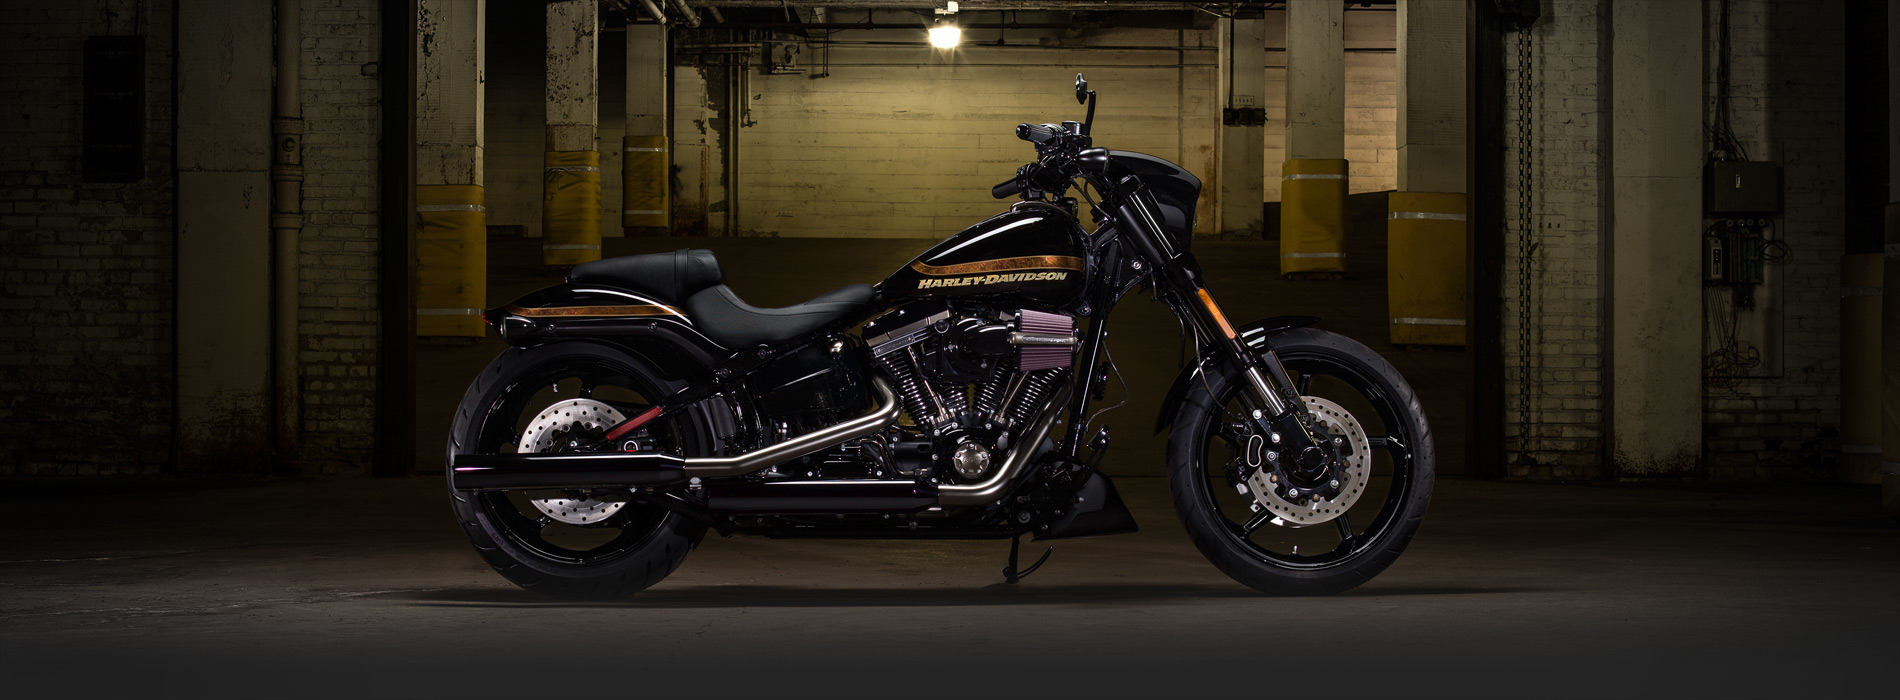 Harley-Davidson Breakout Backgrounds, Compatible - PC, Mobile, Gadgets| 1900x700 px